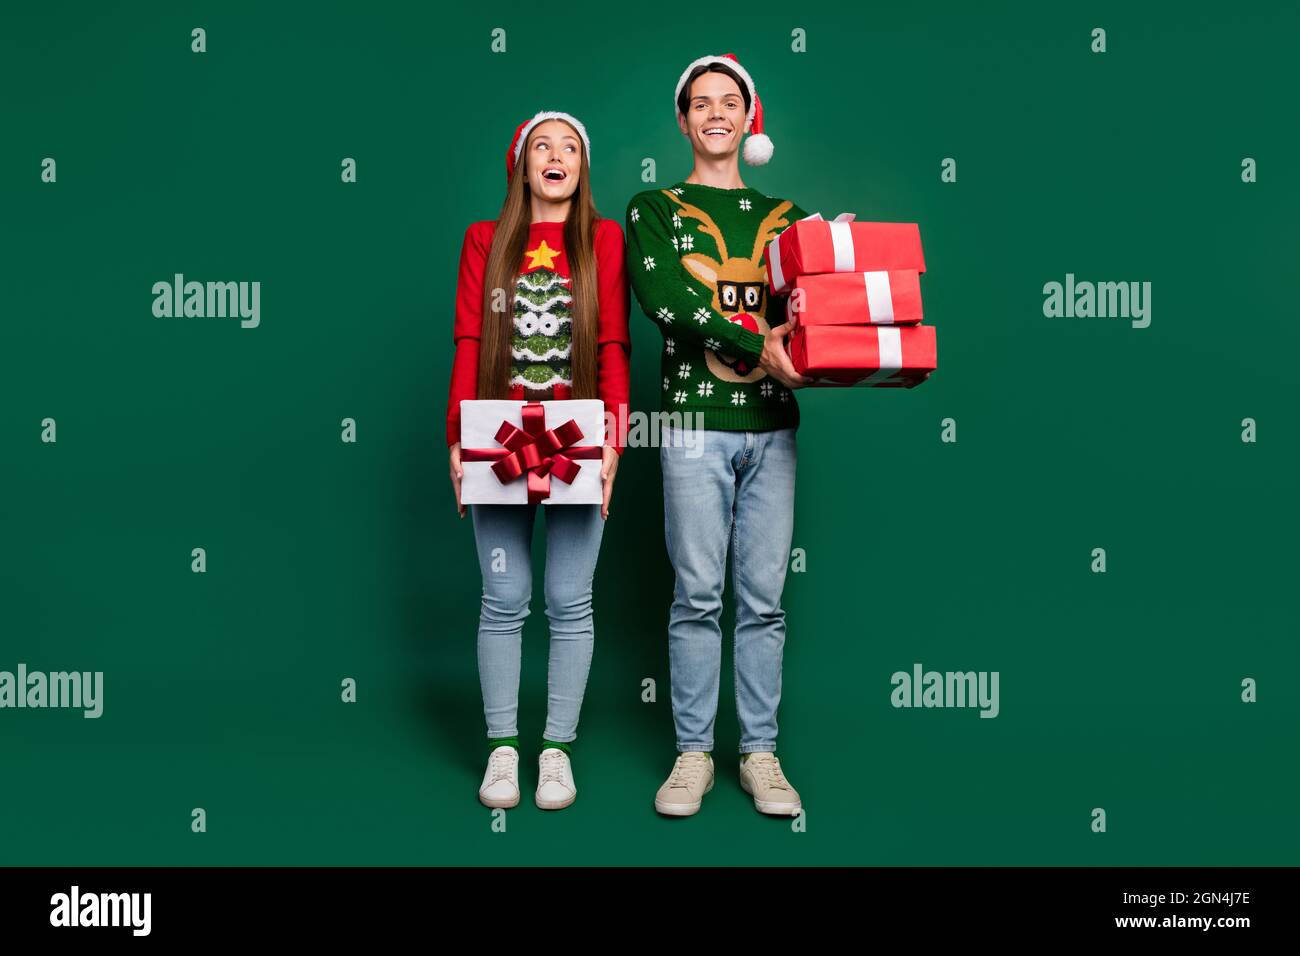 Merry Christmas Sweatshirt Xmas Jumper Fun Celebration Gift Secret Present FC 